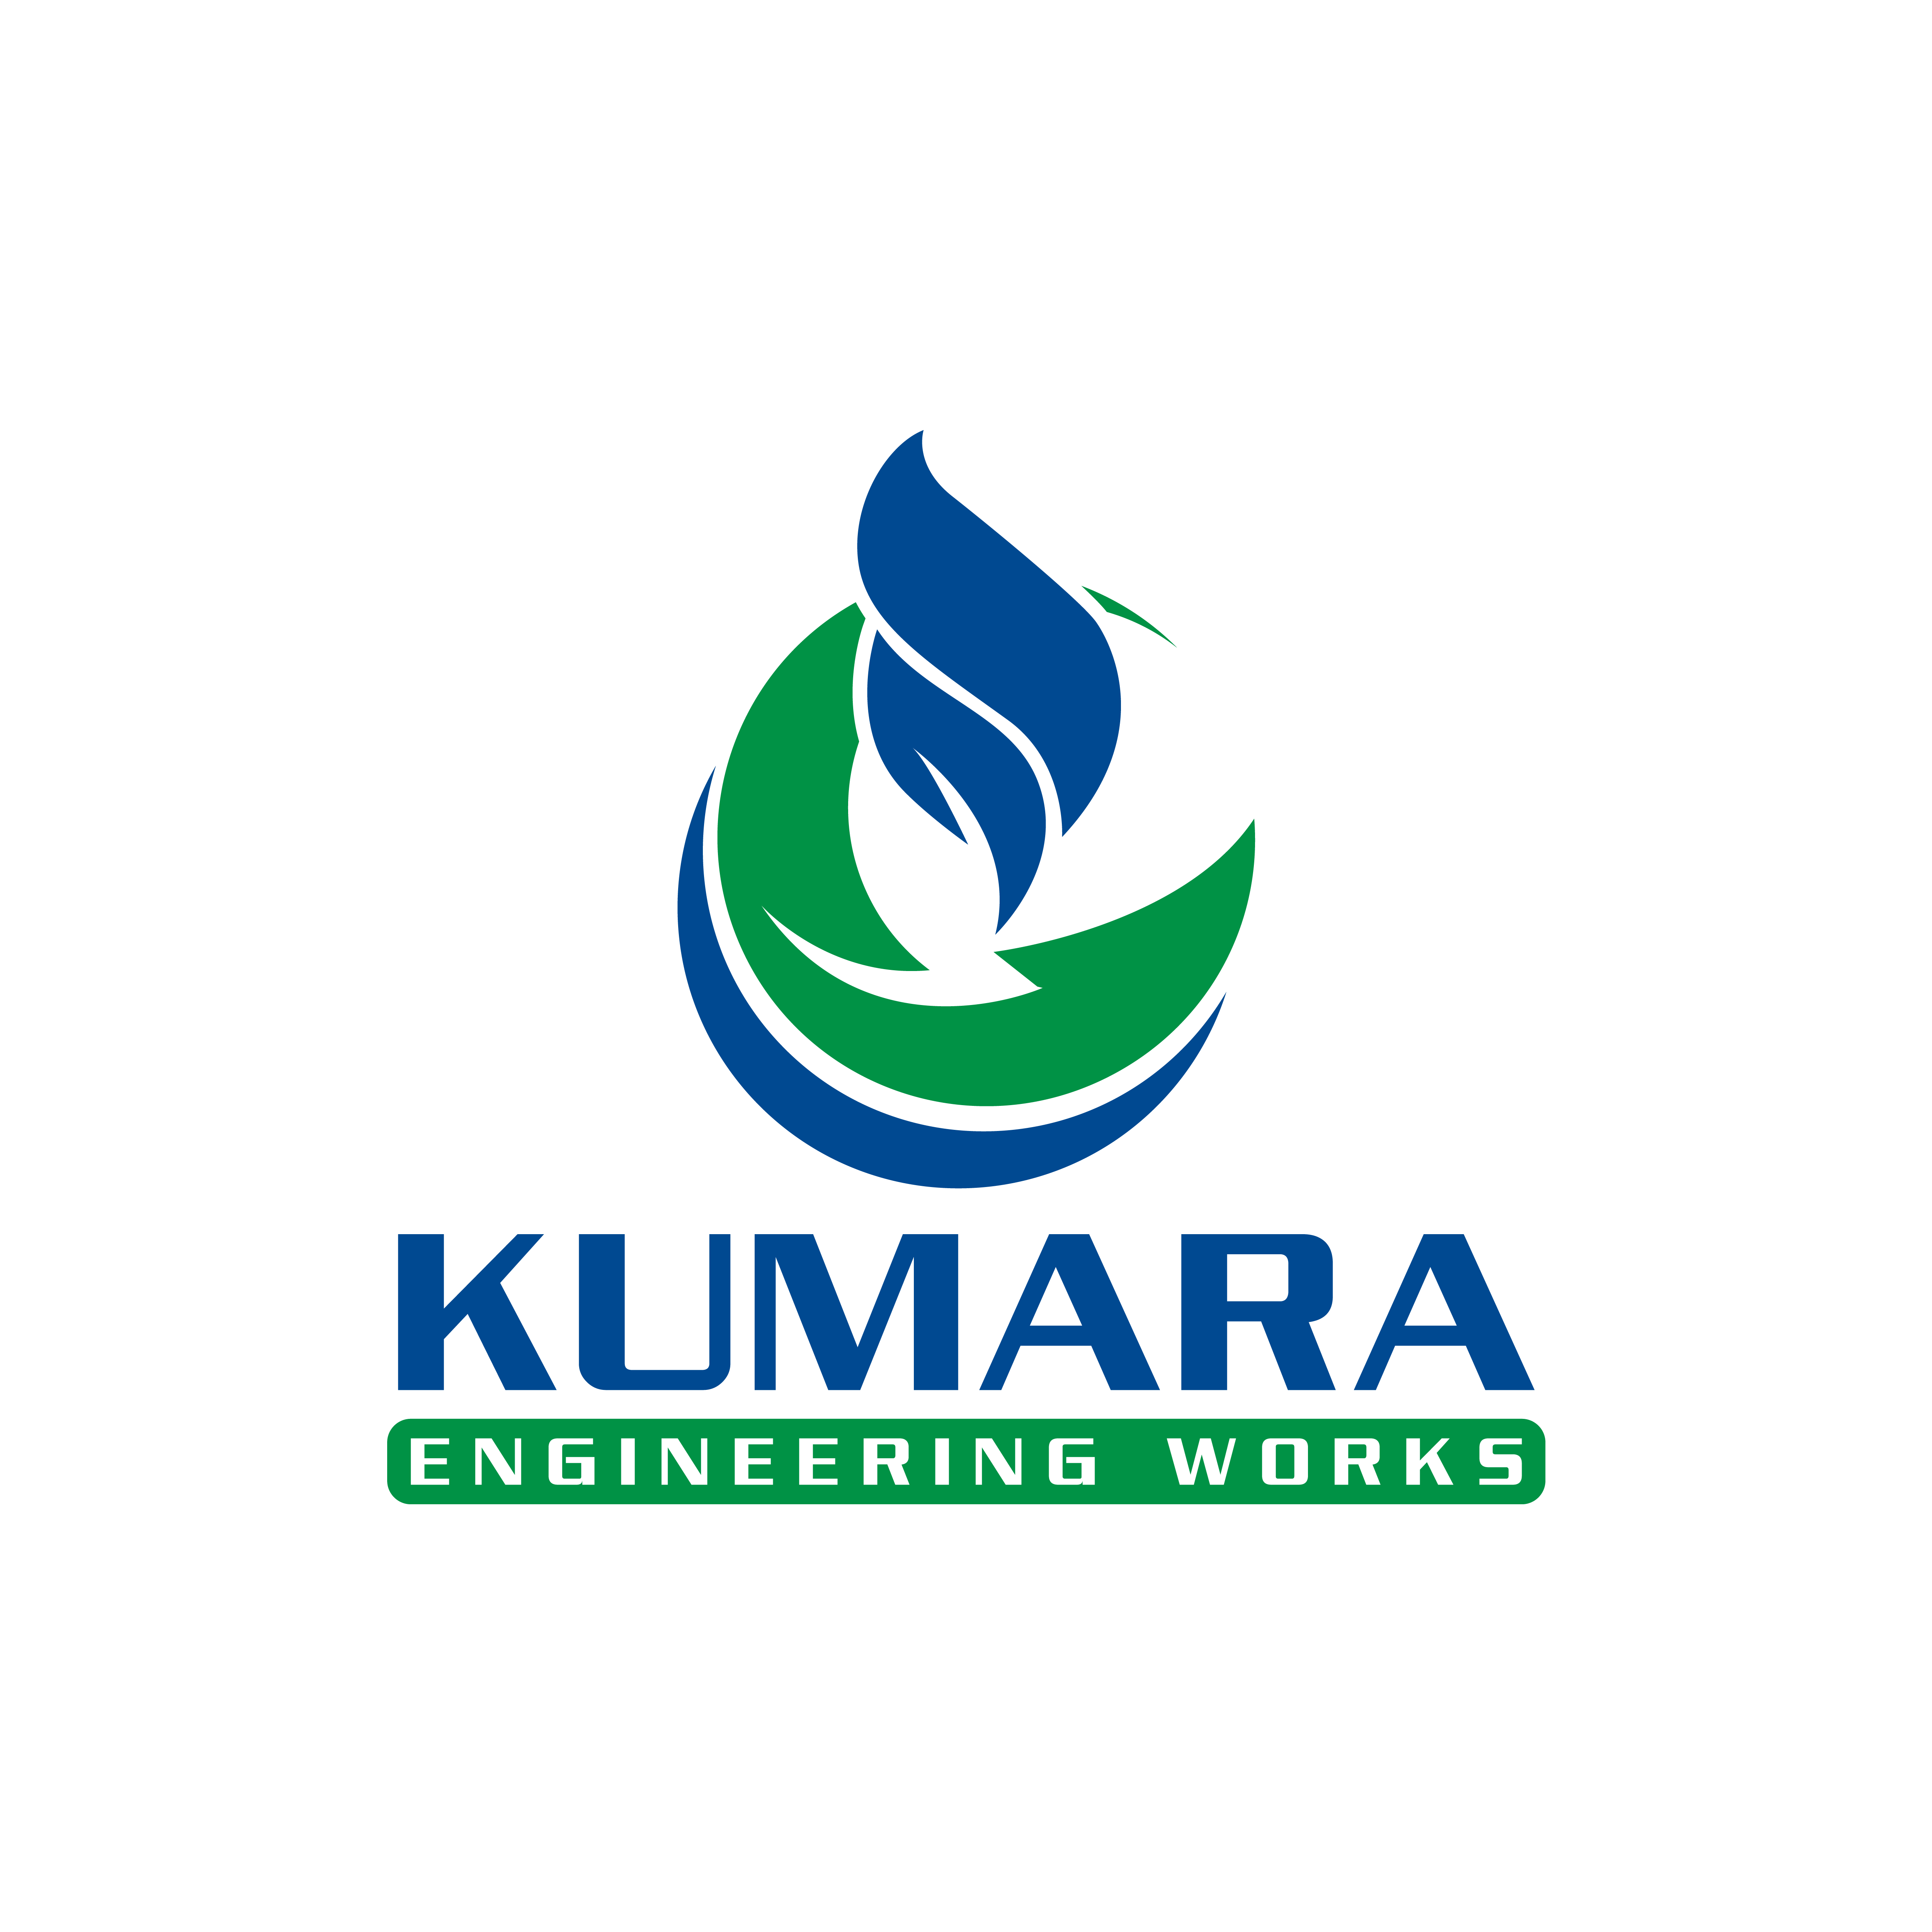 About us - Kumara Engineering Works